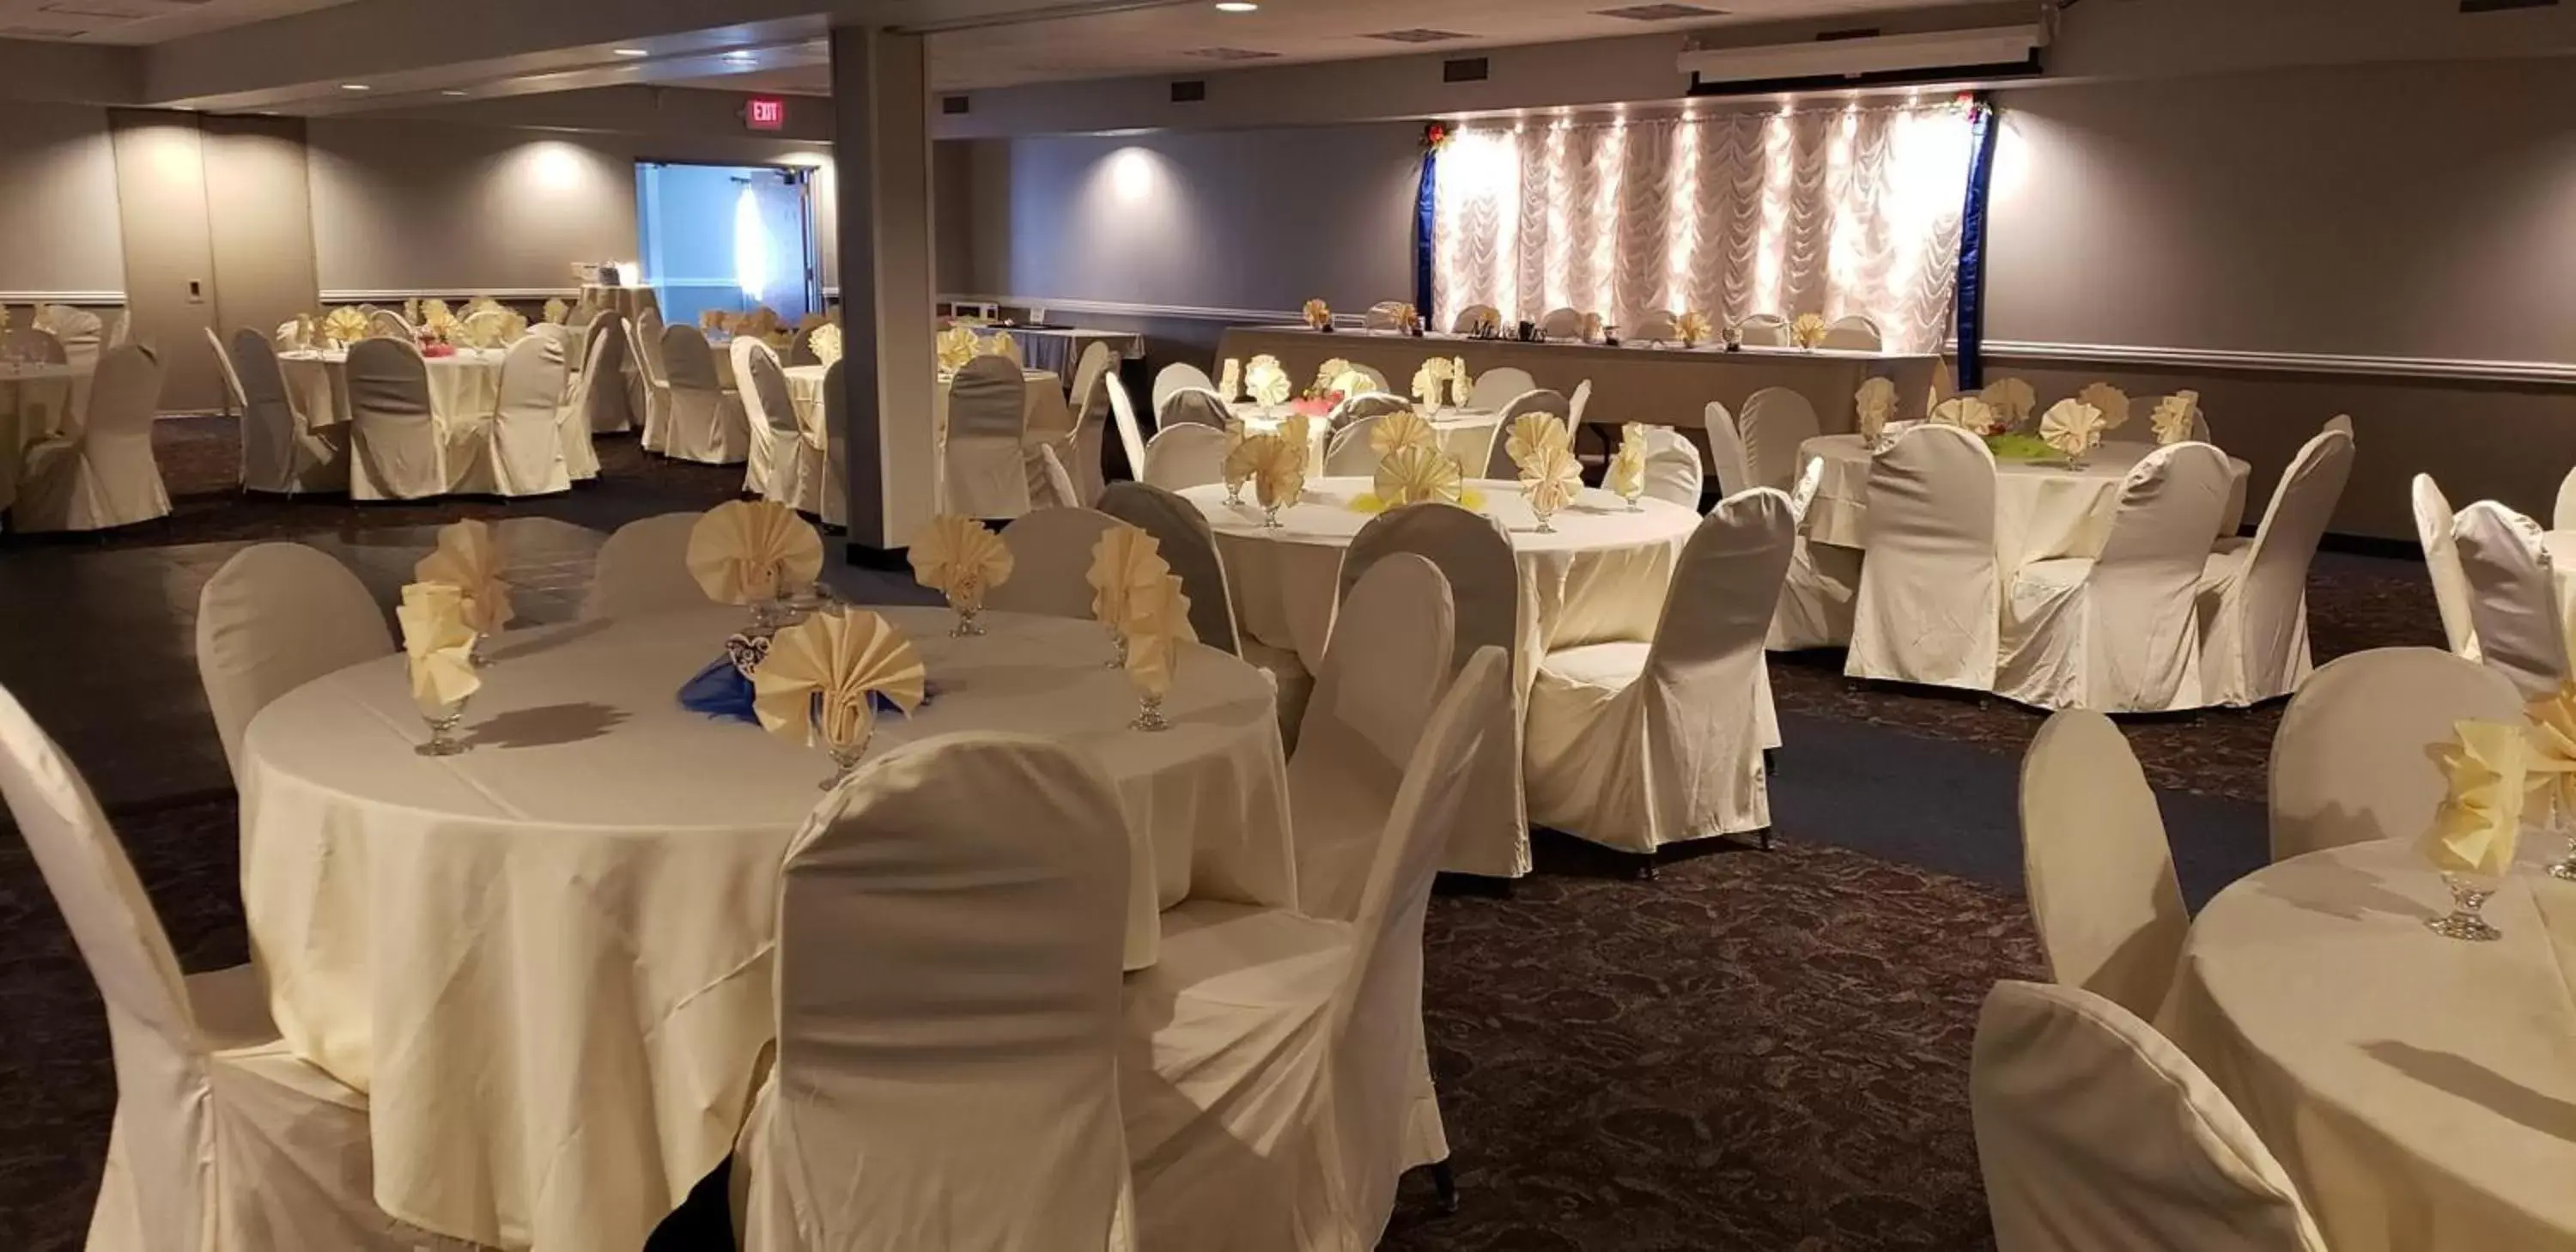 Banquet/Function facilities, Banquet Facilities in AmericInn by Wyndham Mankato Event Center near MSU